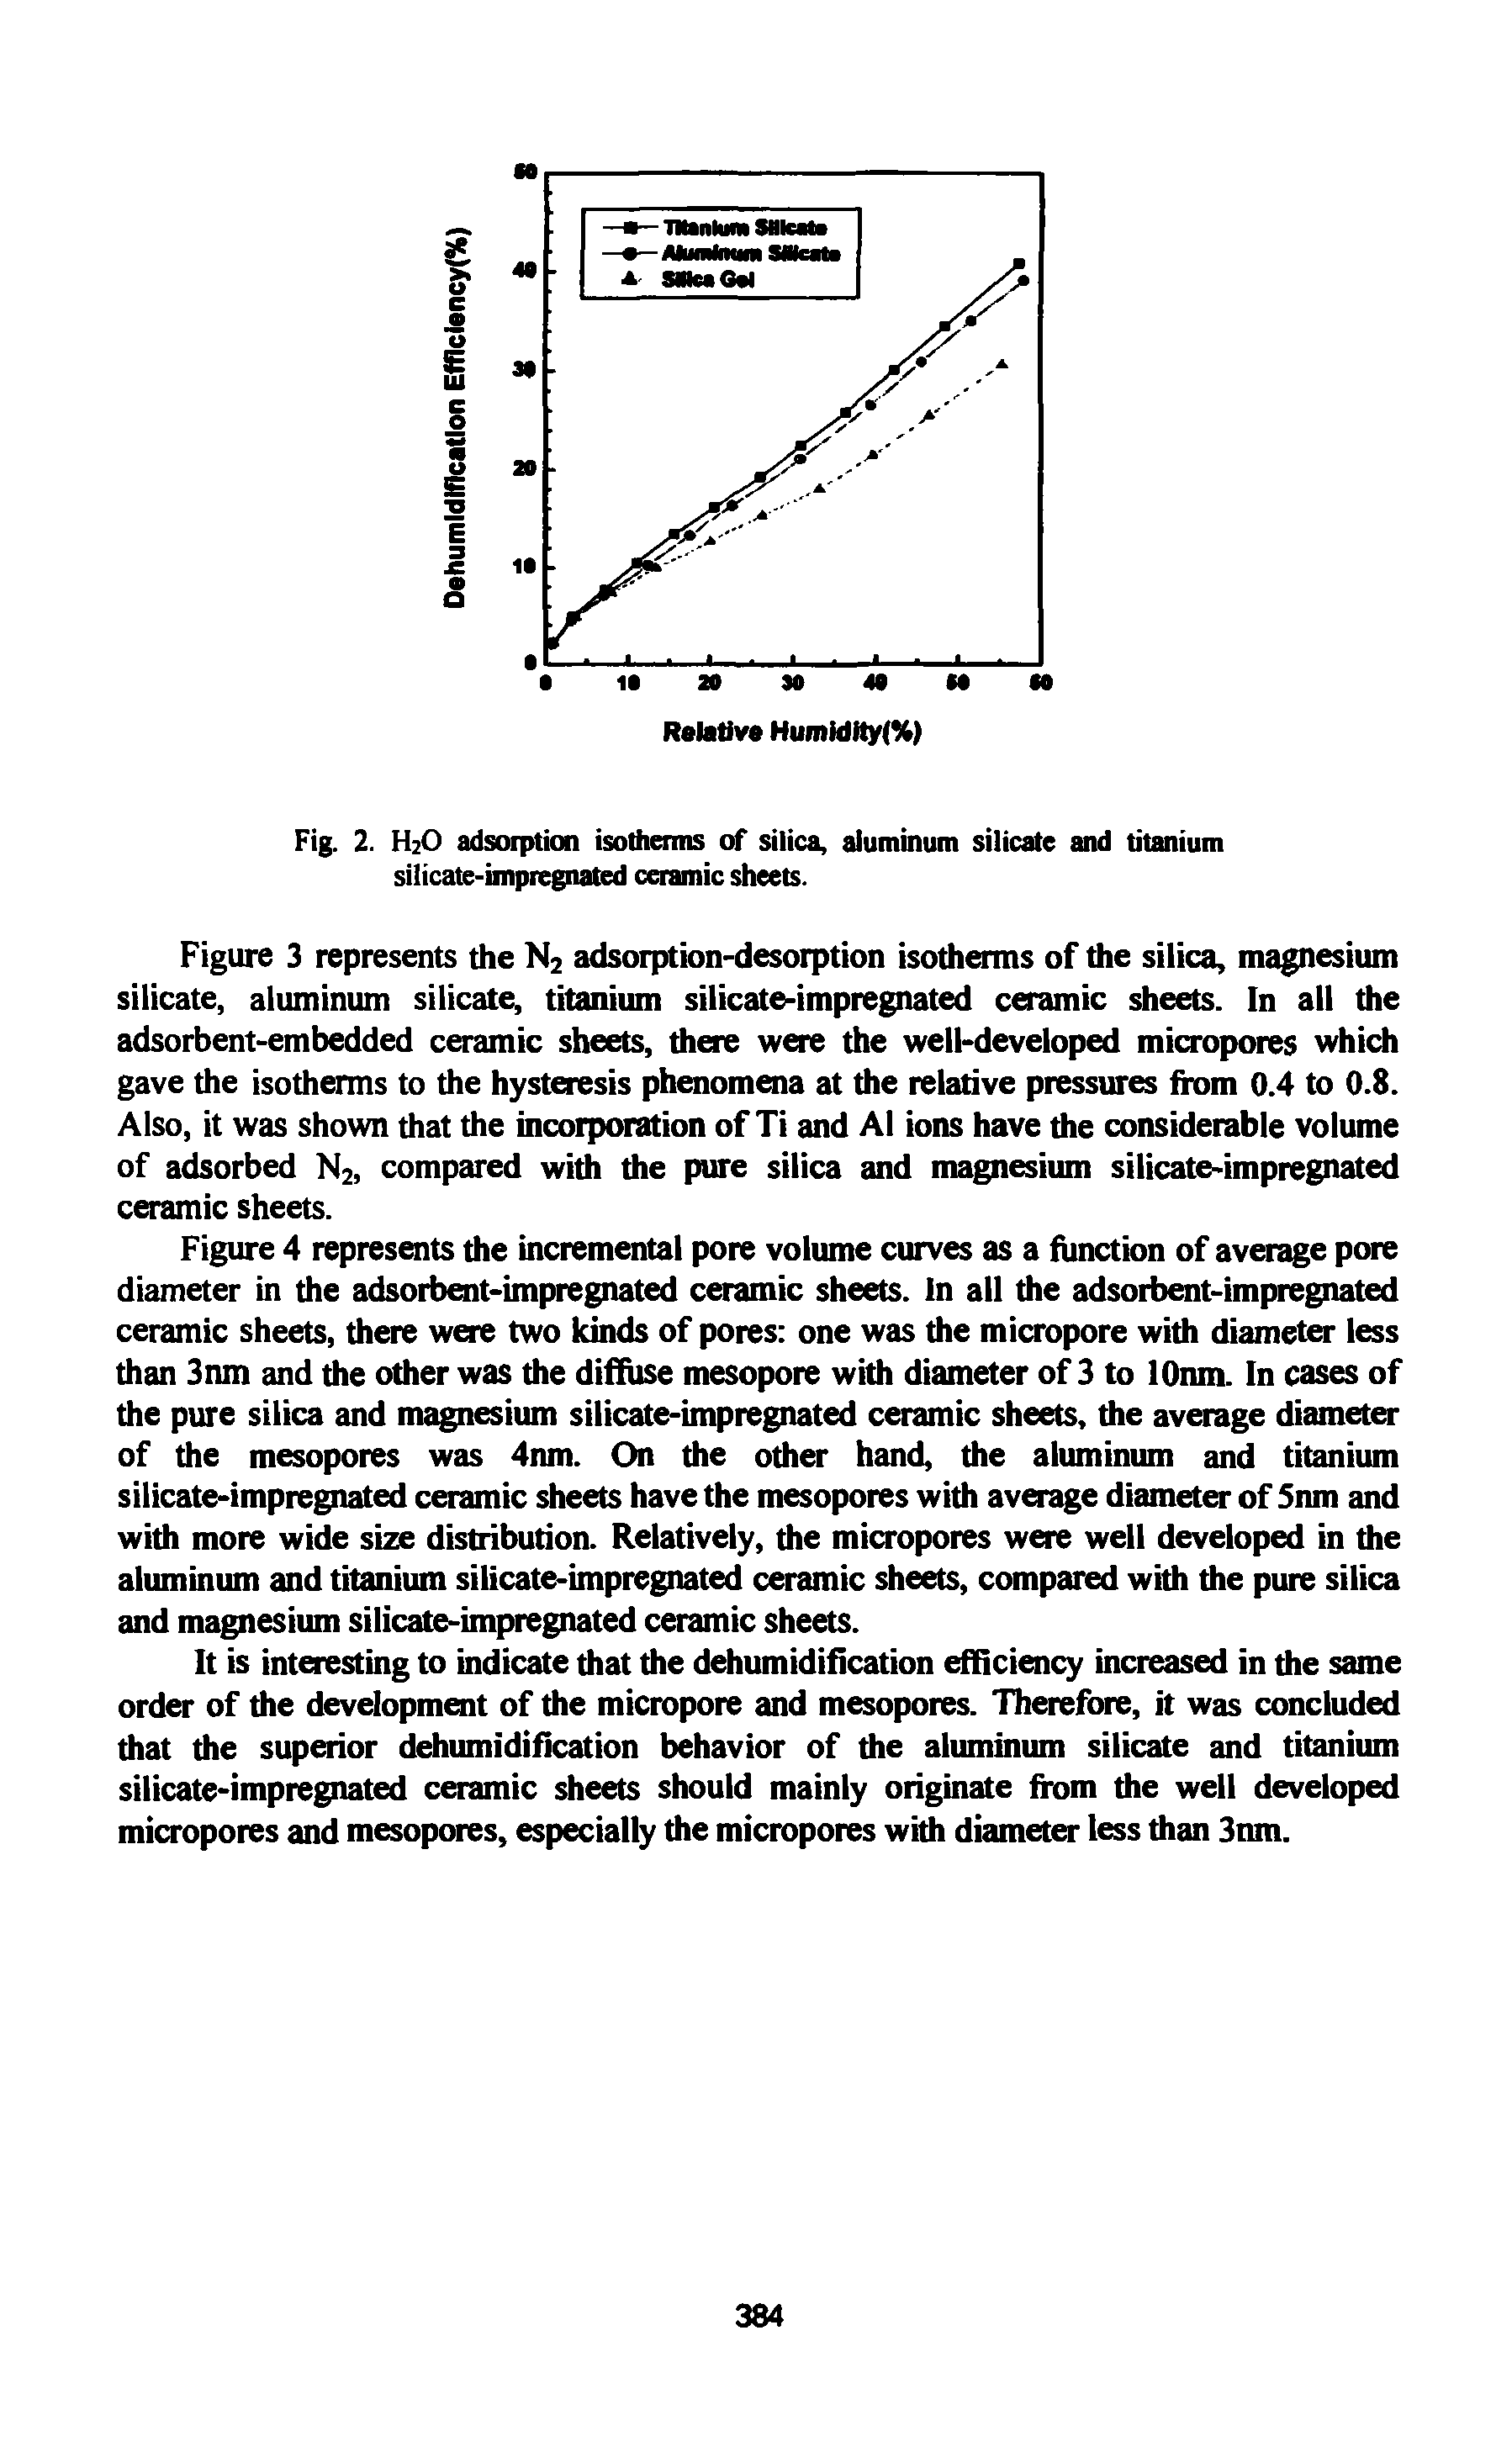 Fig. 2. H2O adsorption isotherms of silica, aluminum silicate and titanium silicate-impregnated ceramic sheets.